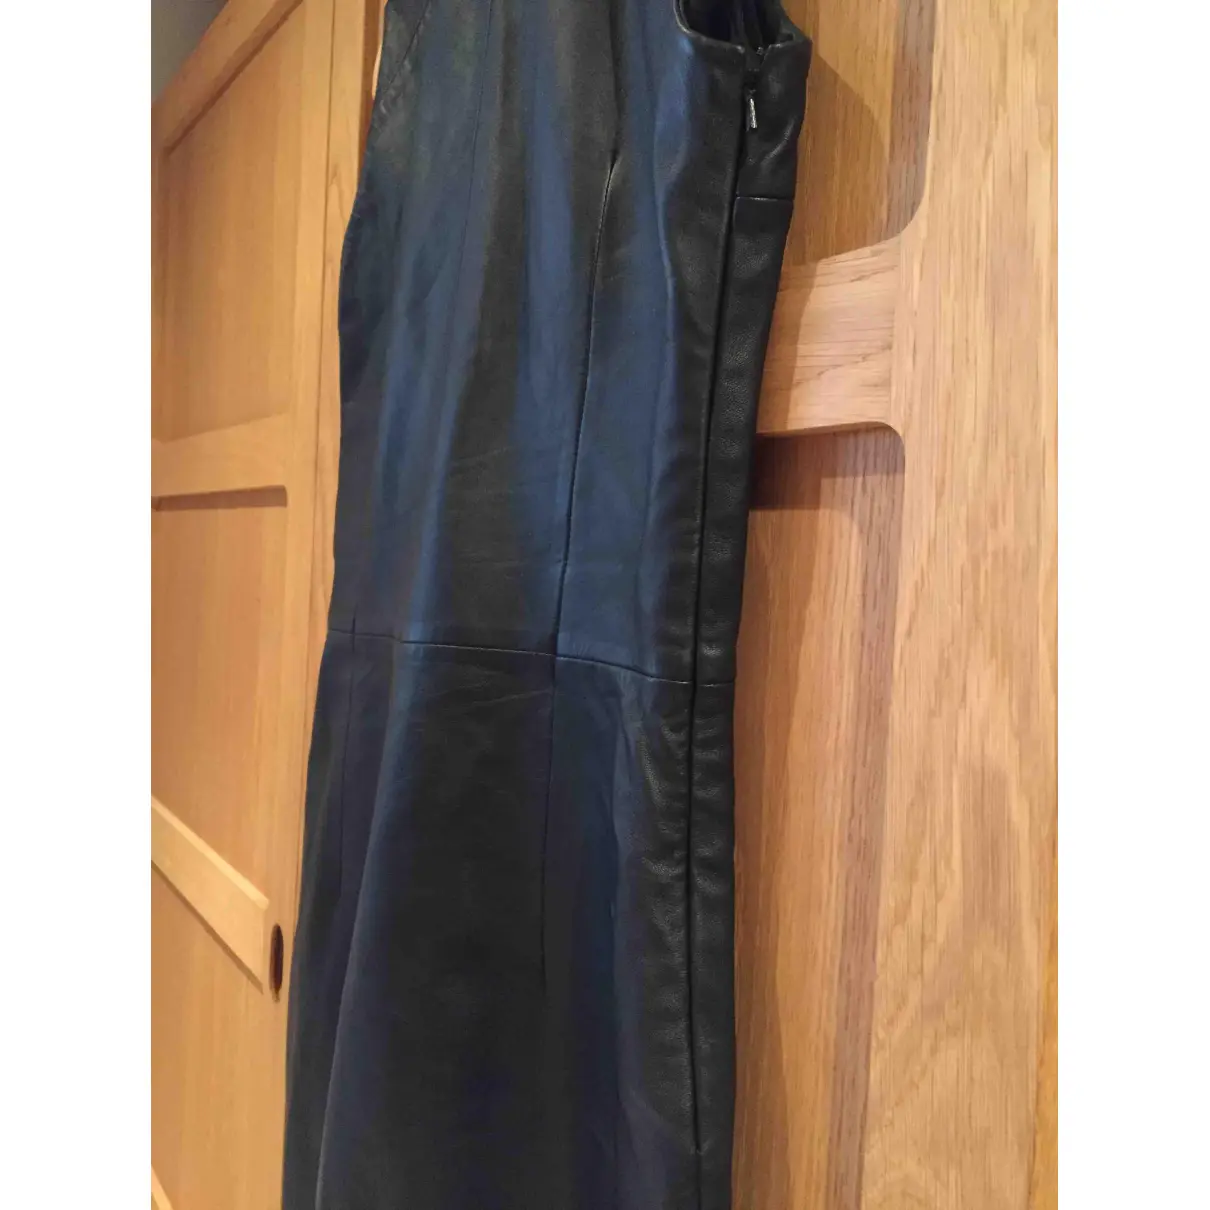 Leather mid-length dress Zapa